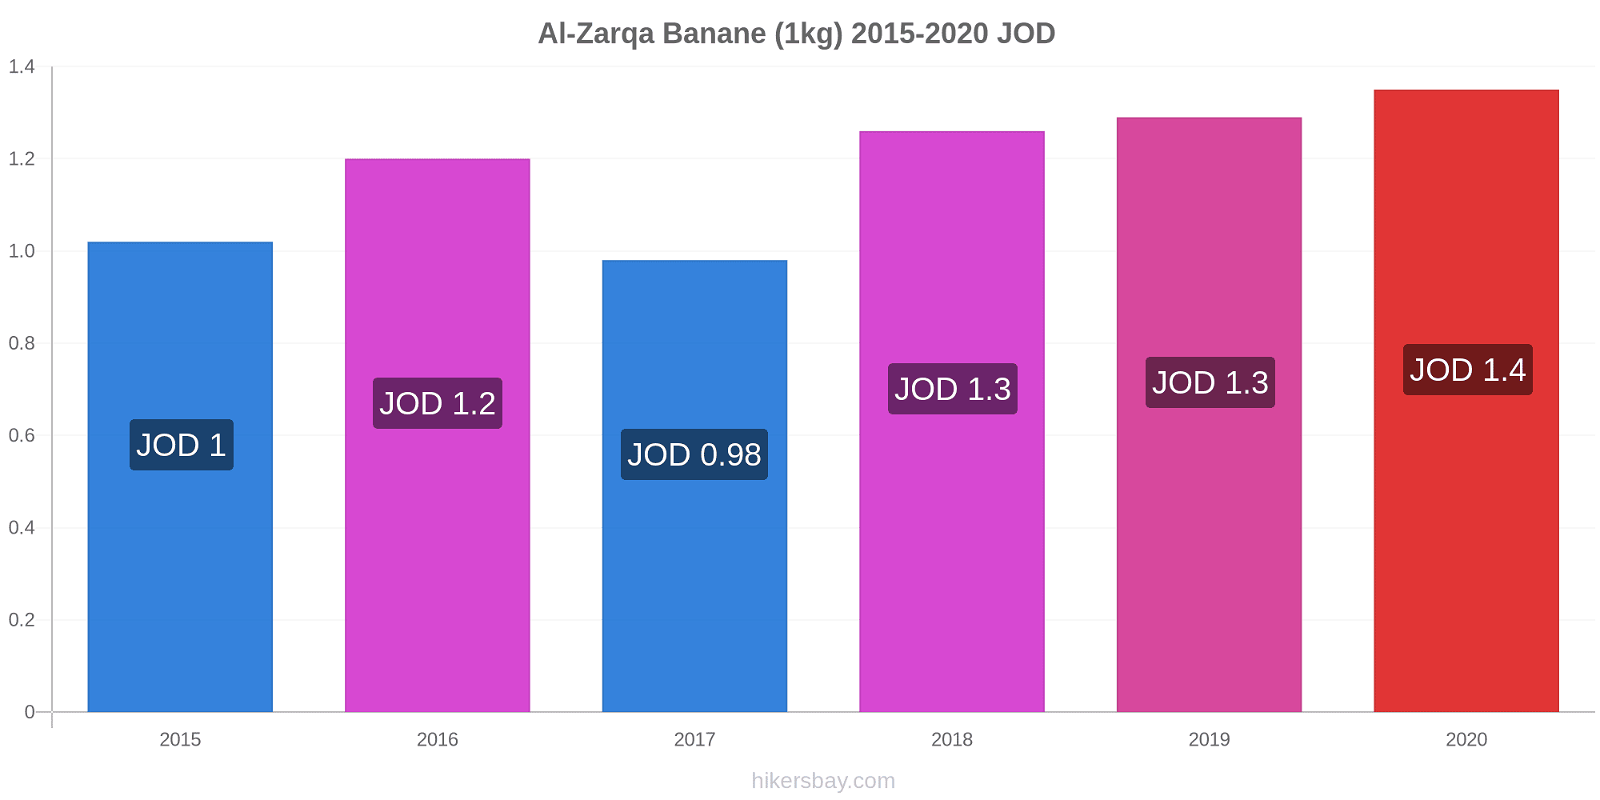 Al-Zarqa variazioni di prezzo Banana (1kg) hikersbay.com